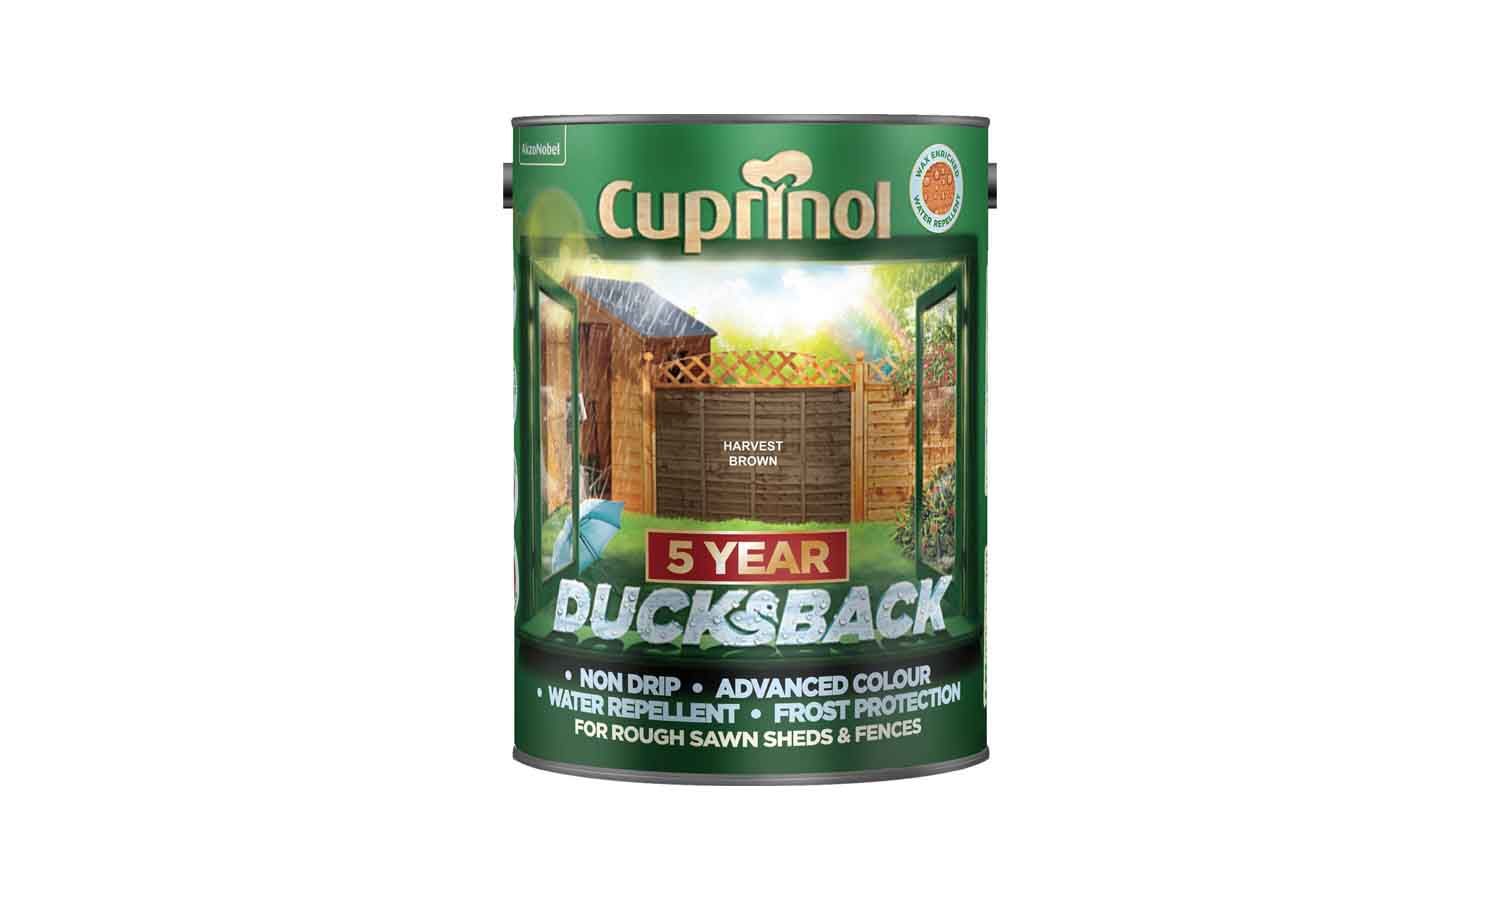 Cuprinol Ducksback Review